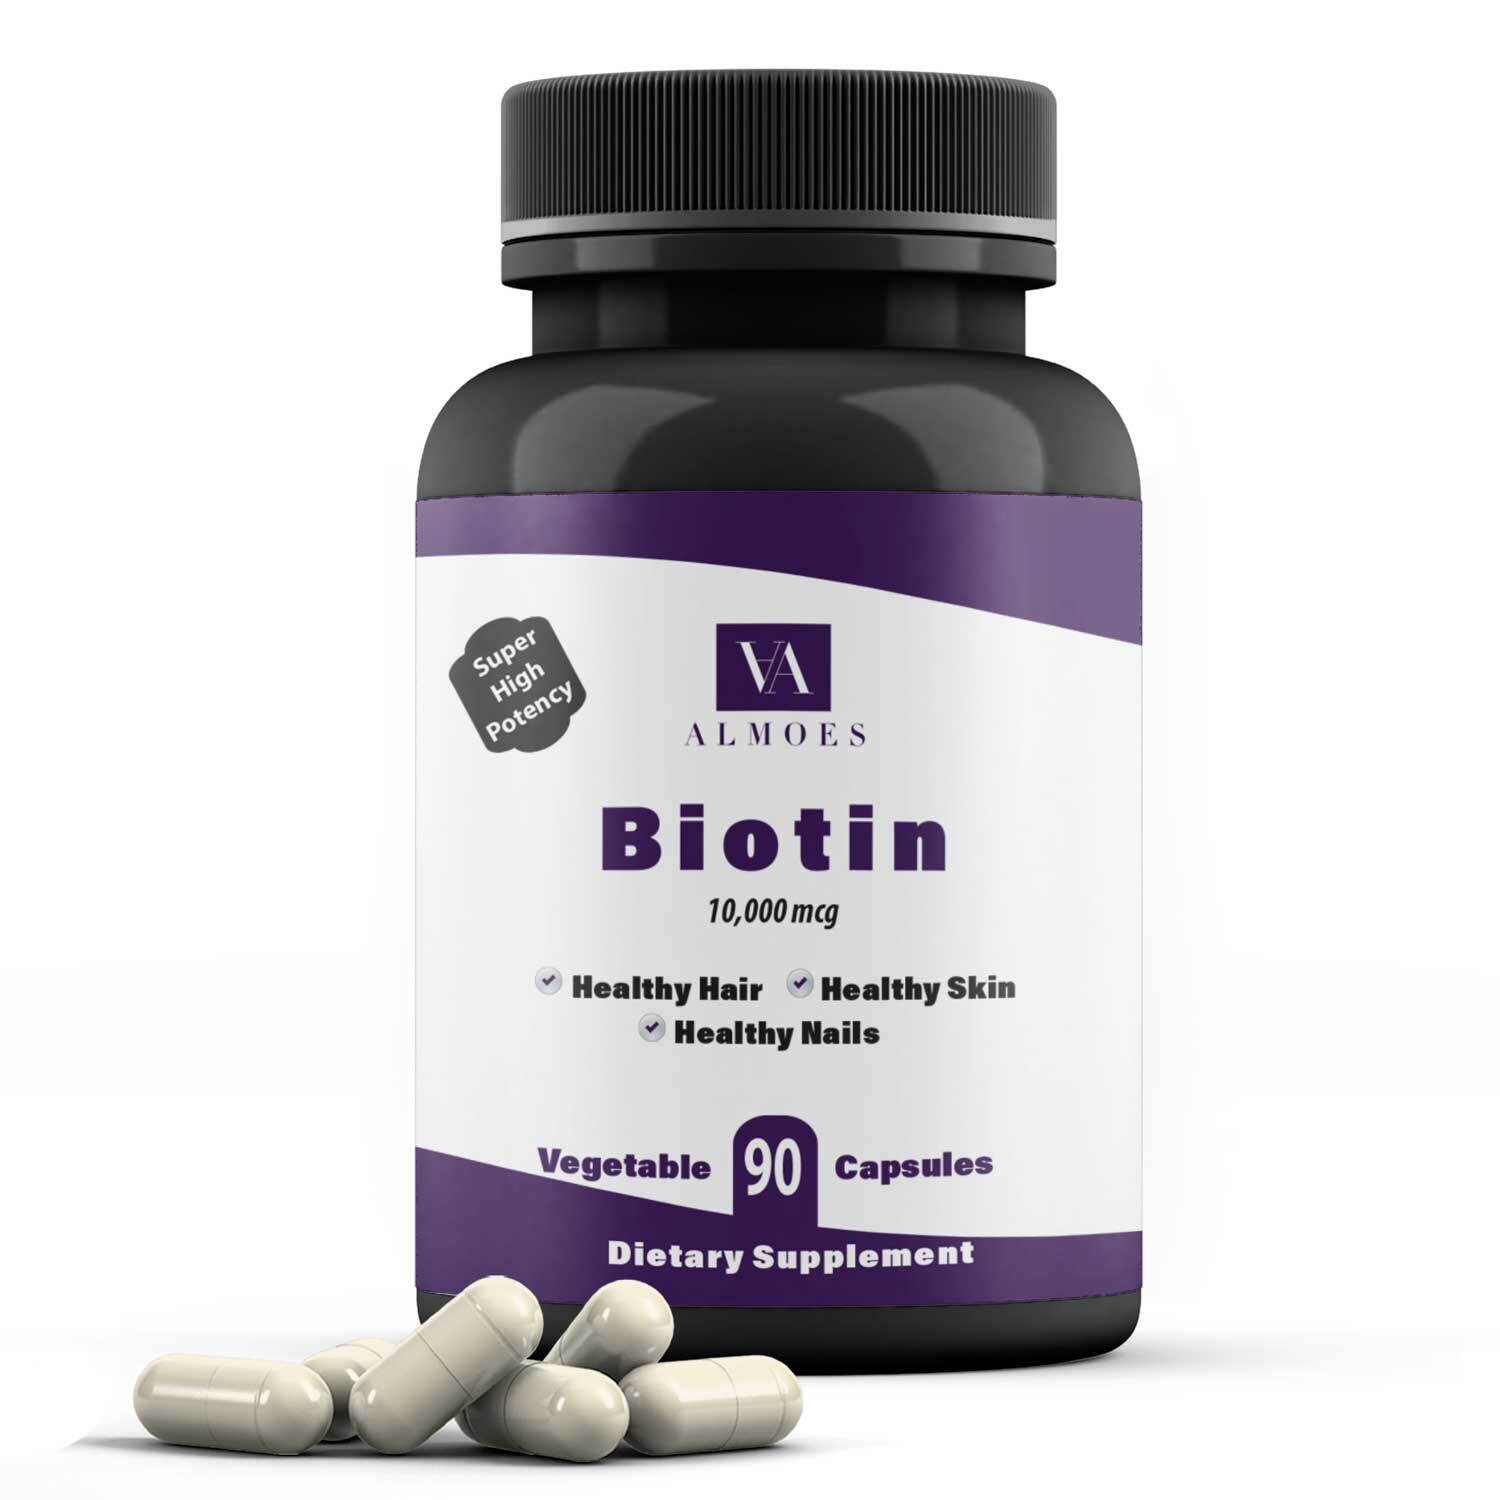 Biotin 10,000 mcg - Supports Healthy Hair, Skin & Nails